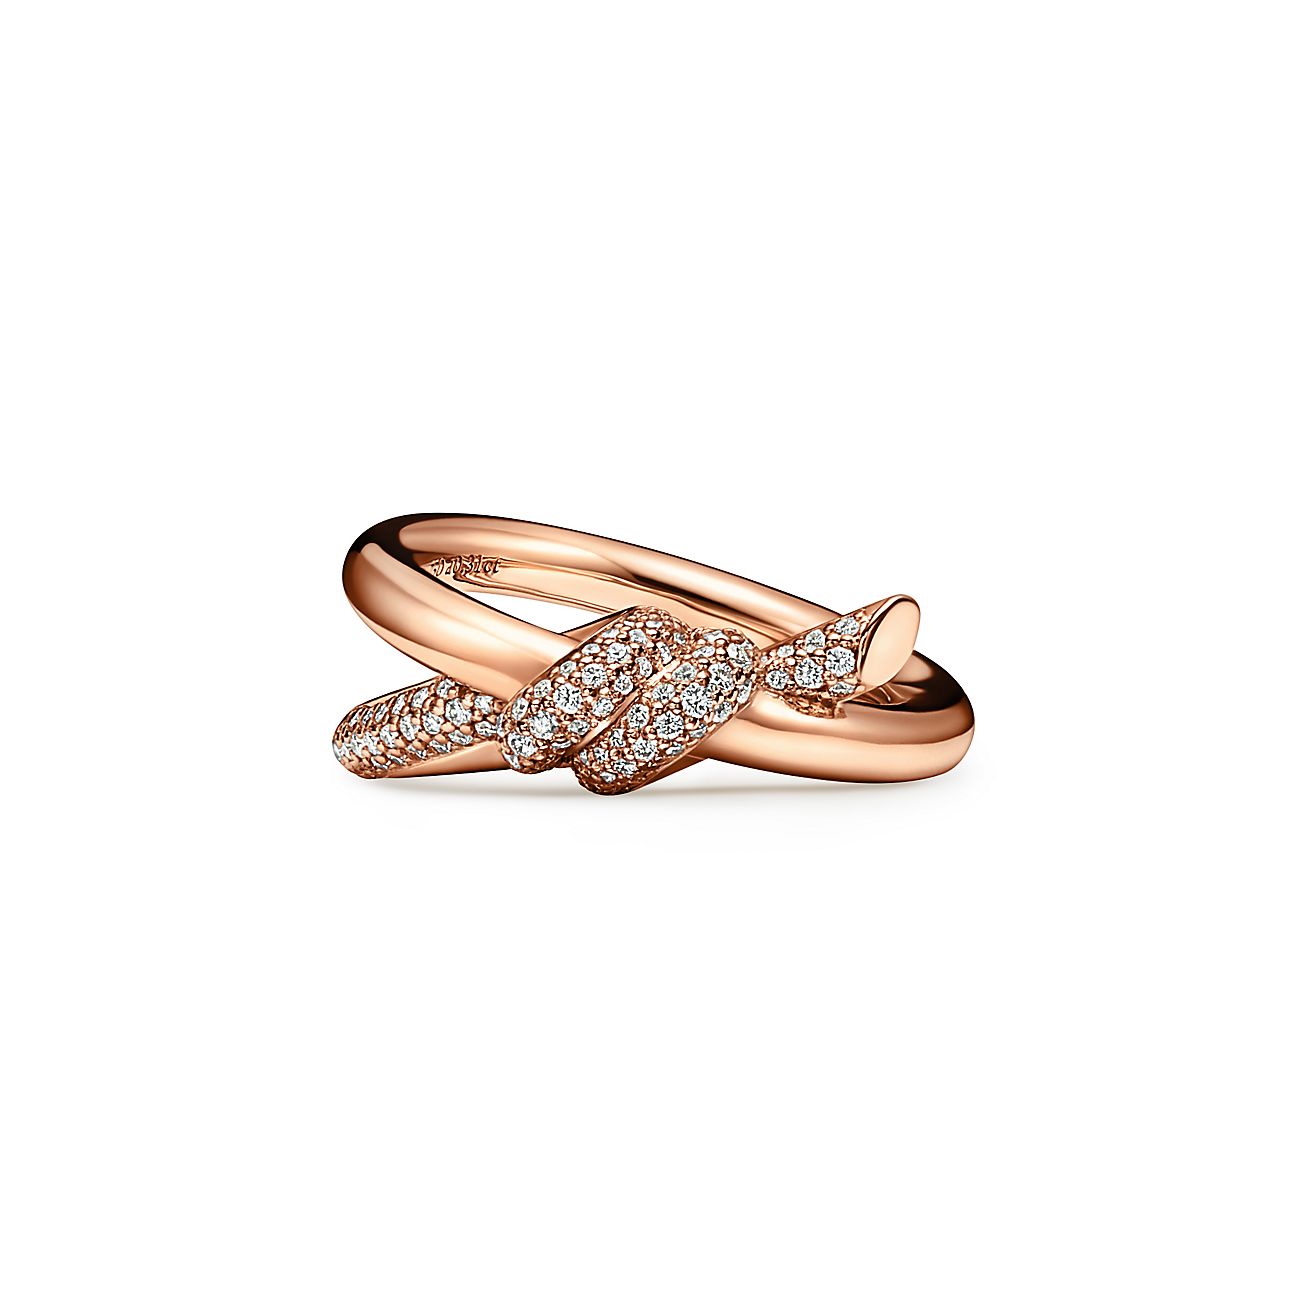 Bague double rang Tiffany Knot en or rose 18 carats et diamants - Size 13 Tiffany & Co.